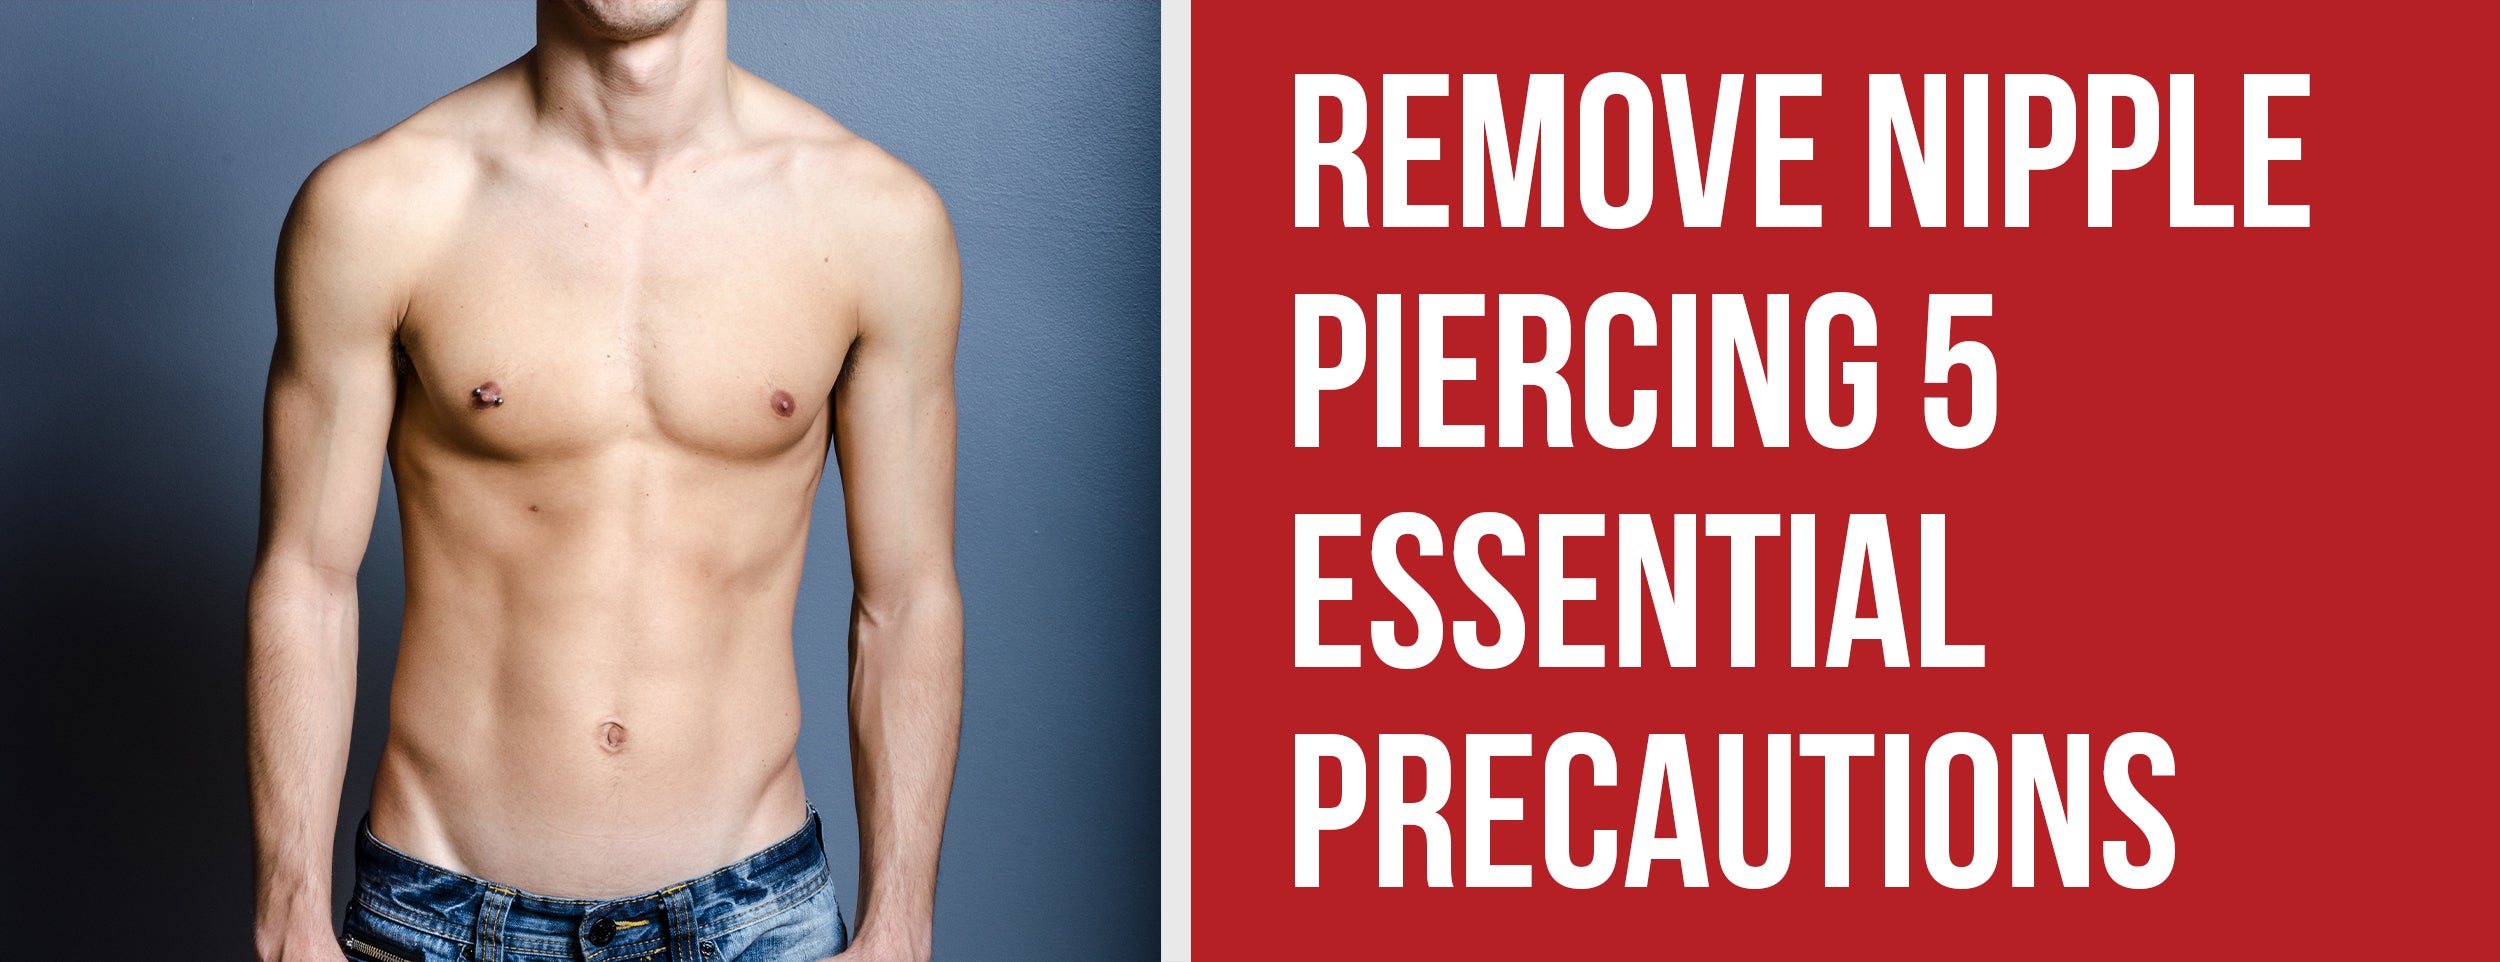 Remove nipple piercing: 5 Essential Precautions